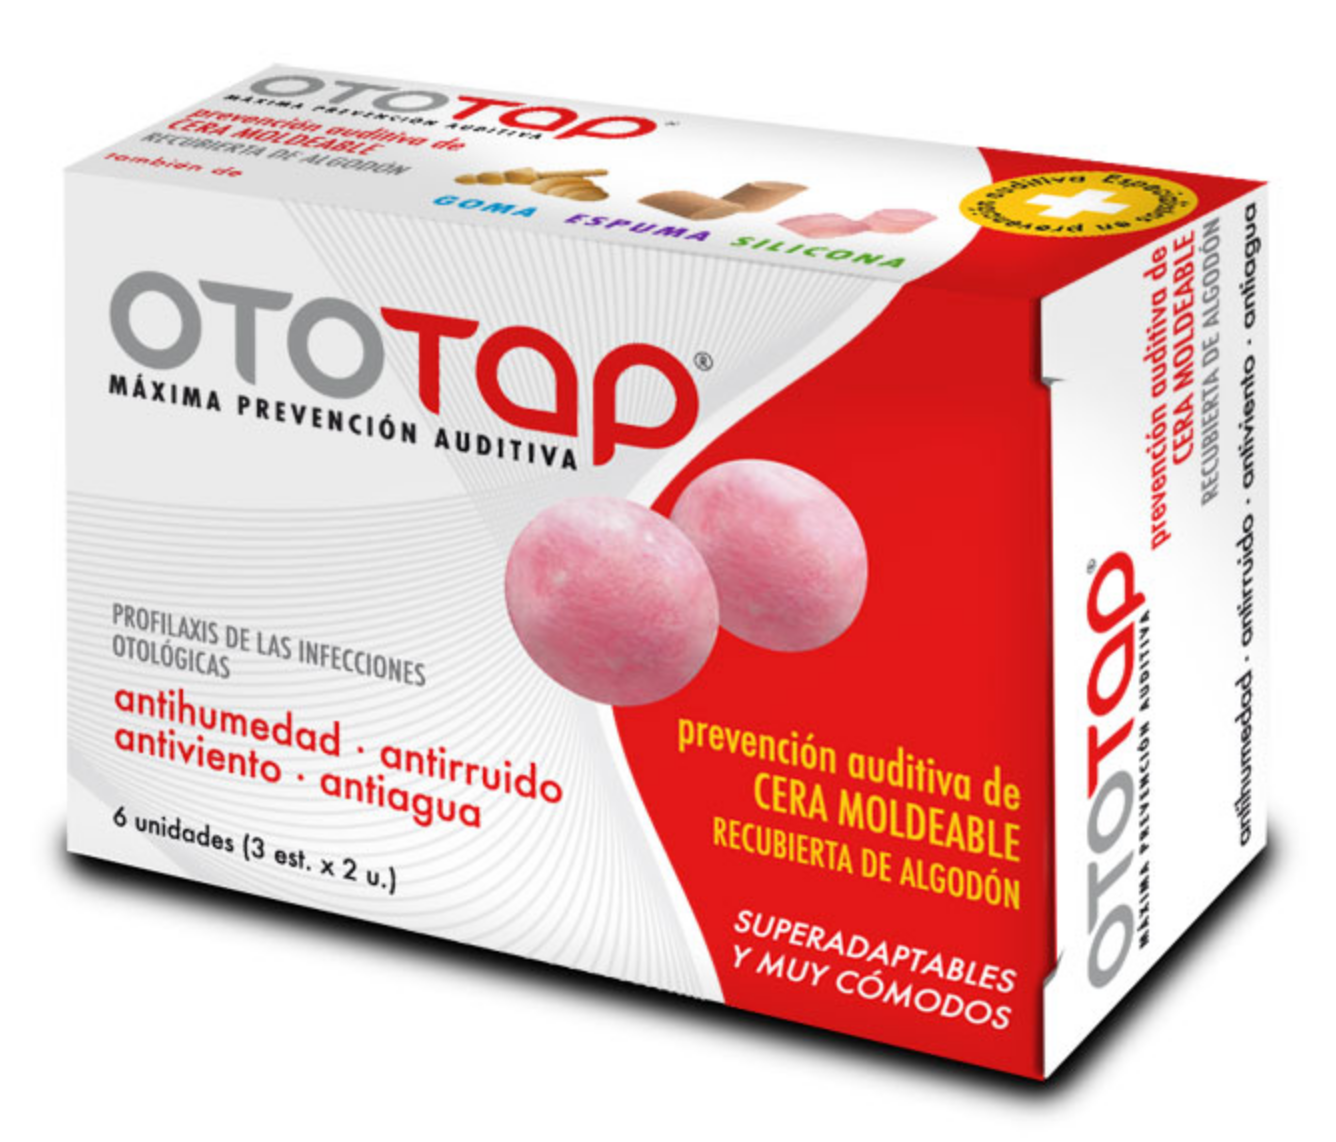 OTOTAP Cera moldeable recubierta de algodón 6 Unidades